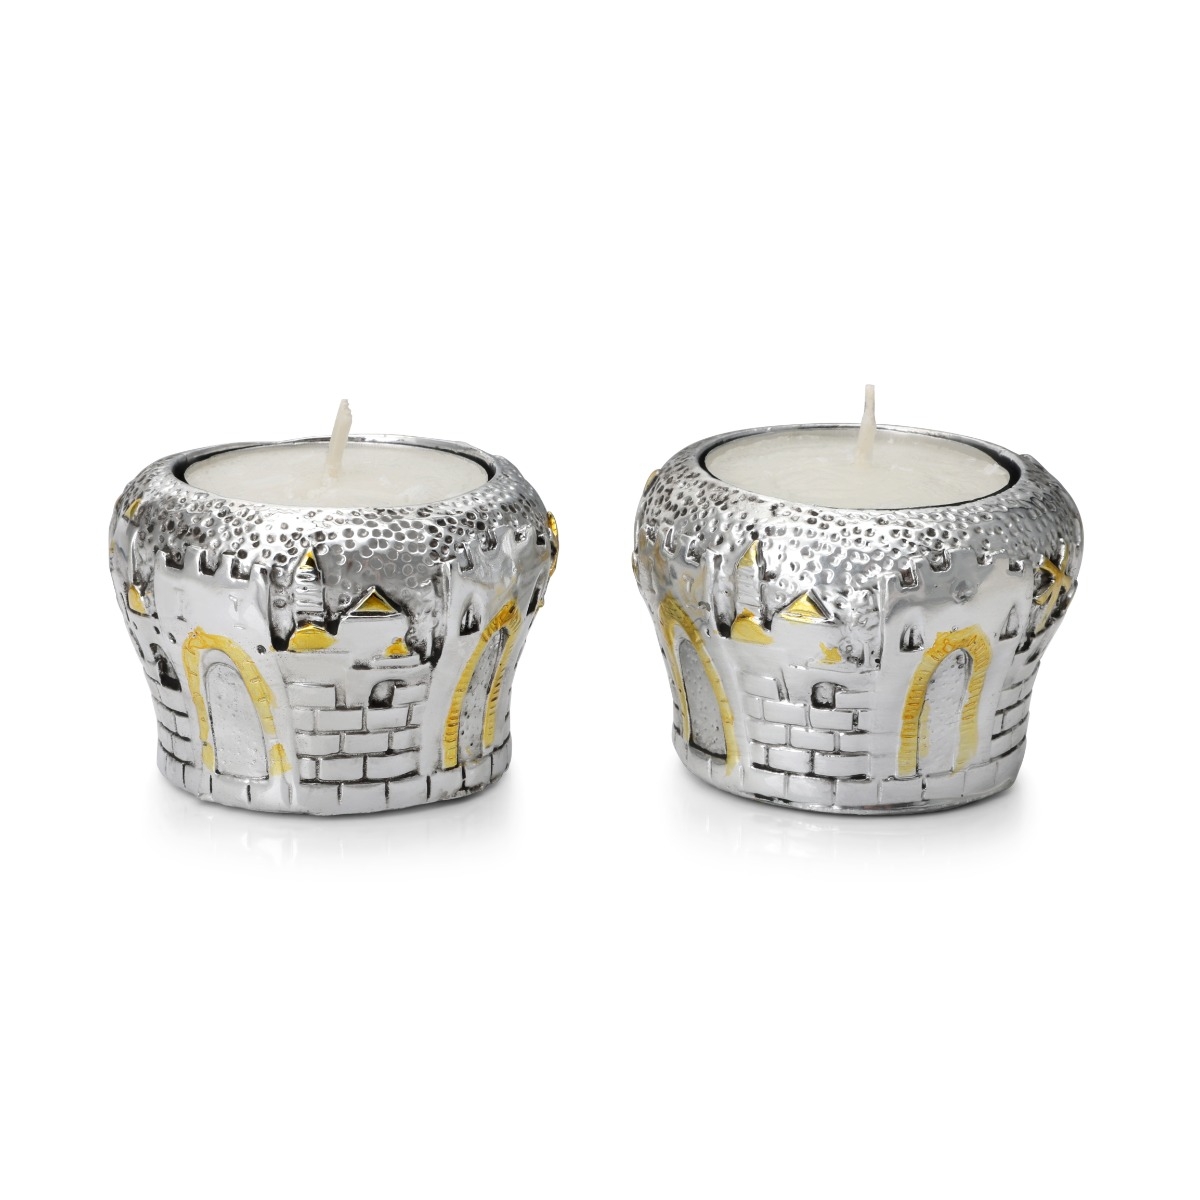 Silver-Plated Candlesticks With Jerusalem Gates Design - 1